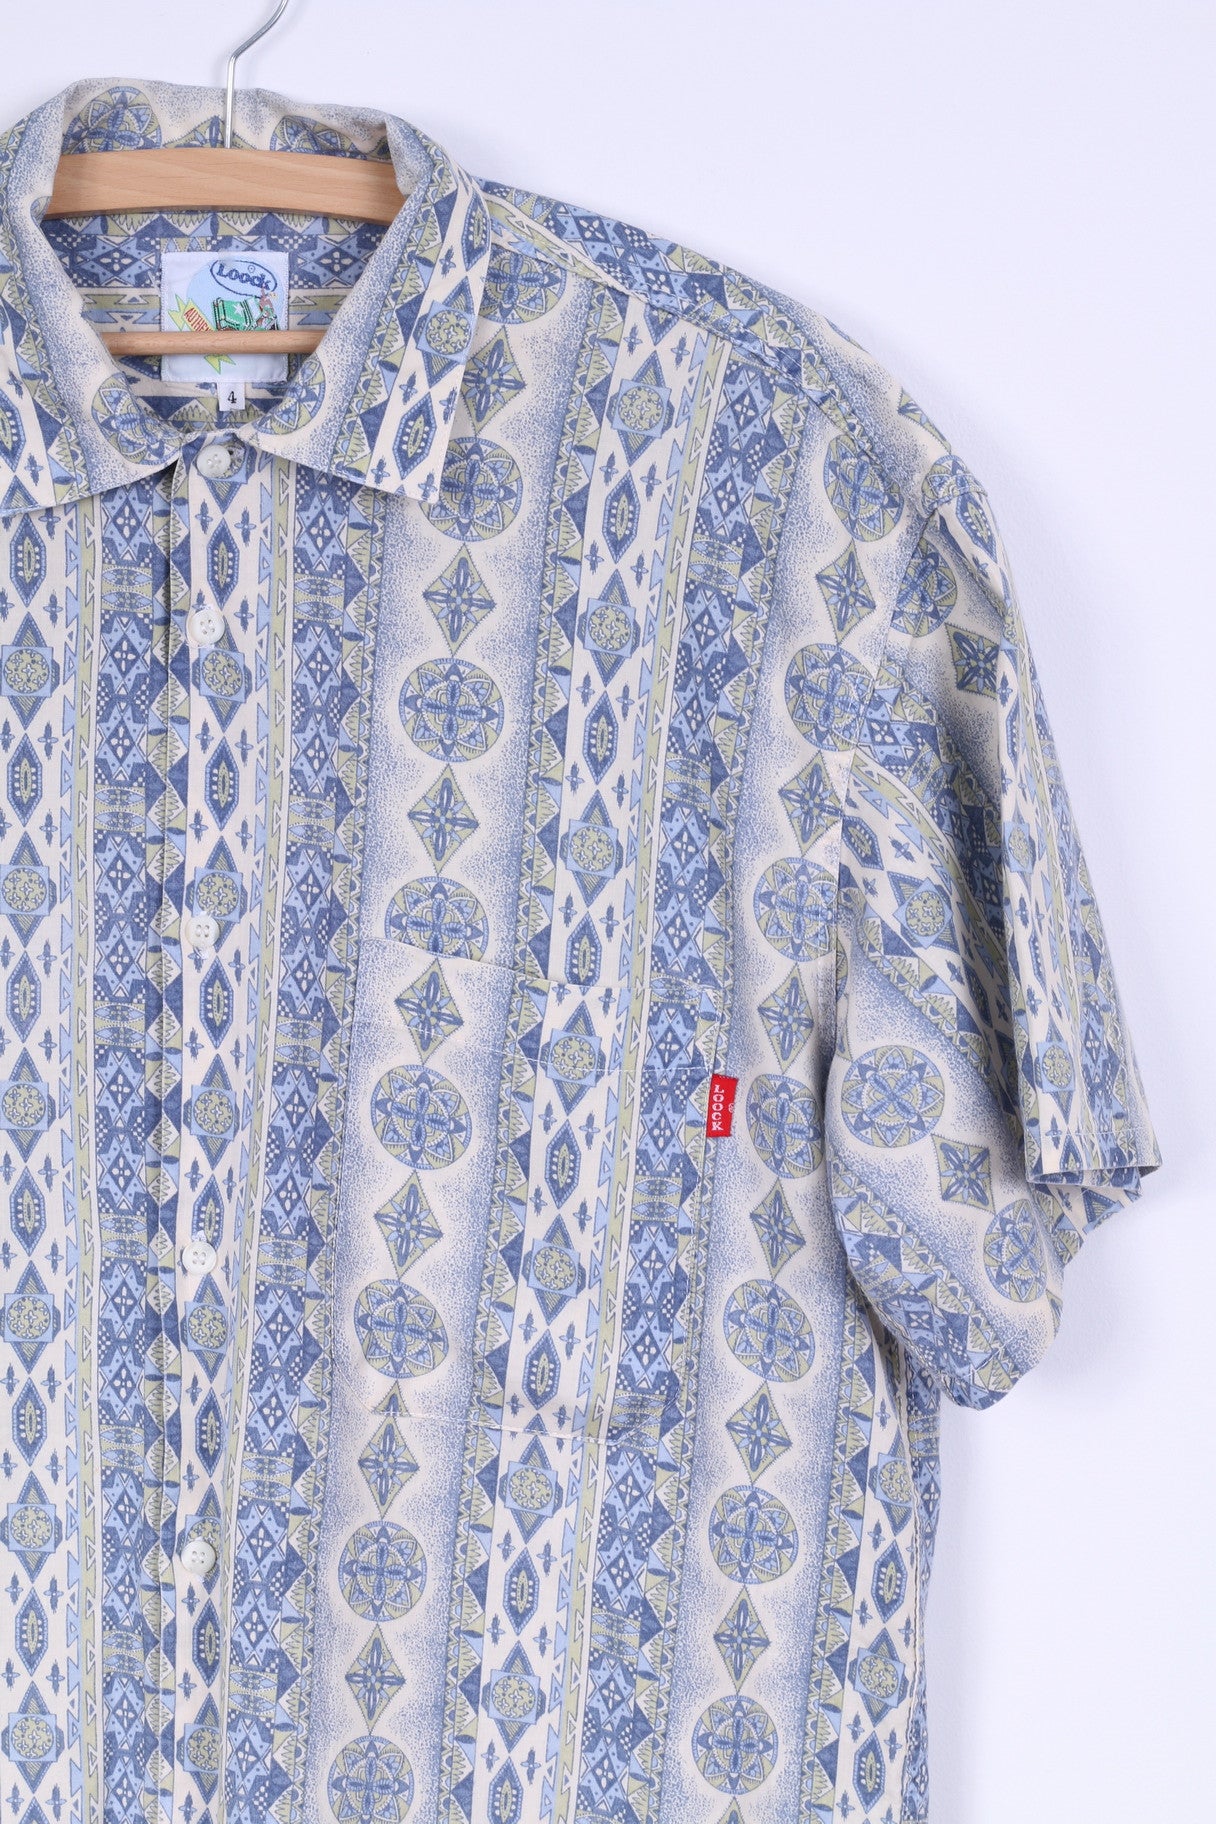 Loock Mens 4 M Casual Shirt Cotton Aztec Pattern Blue Short Sleeve